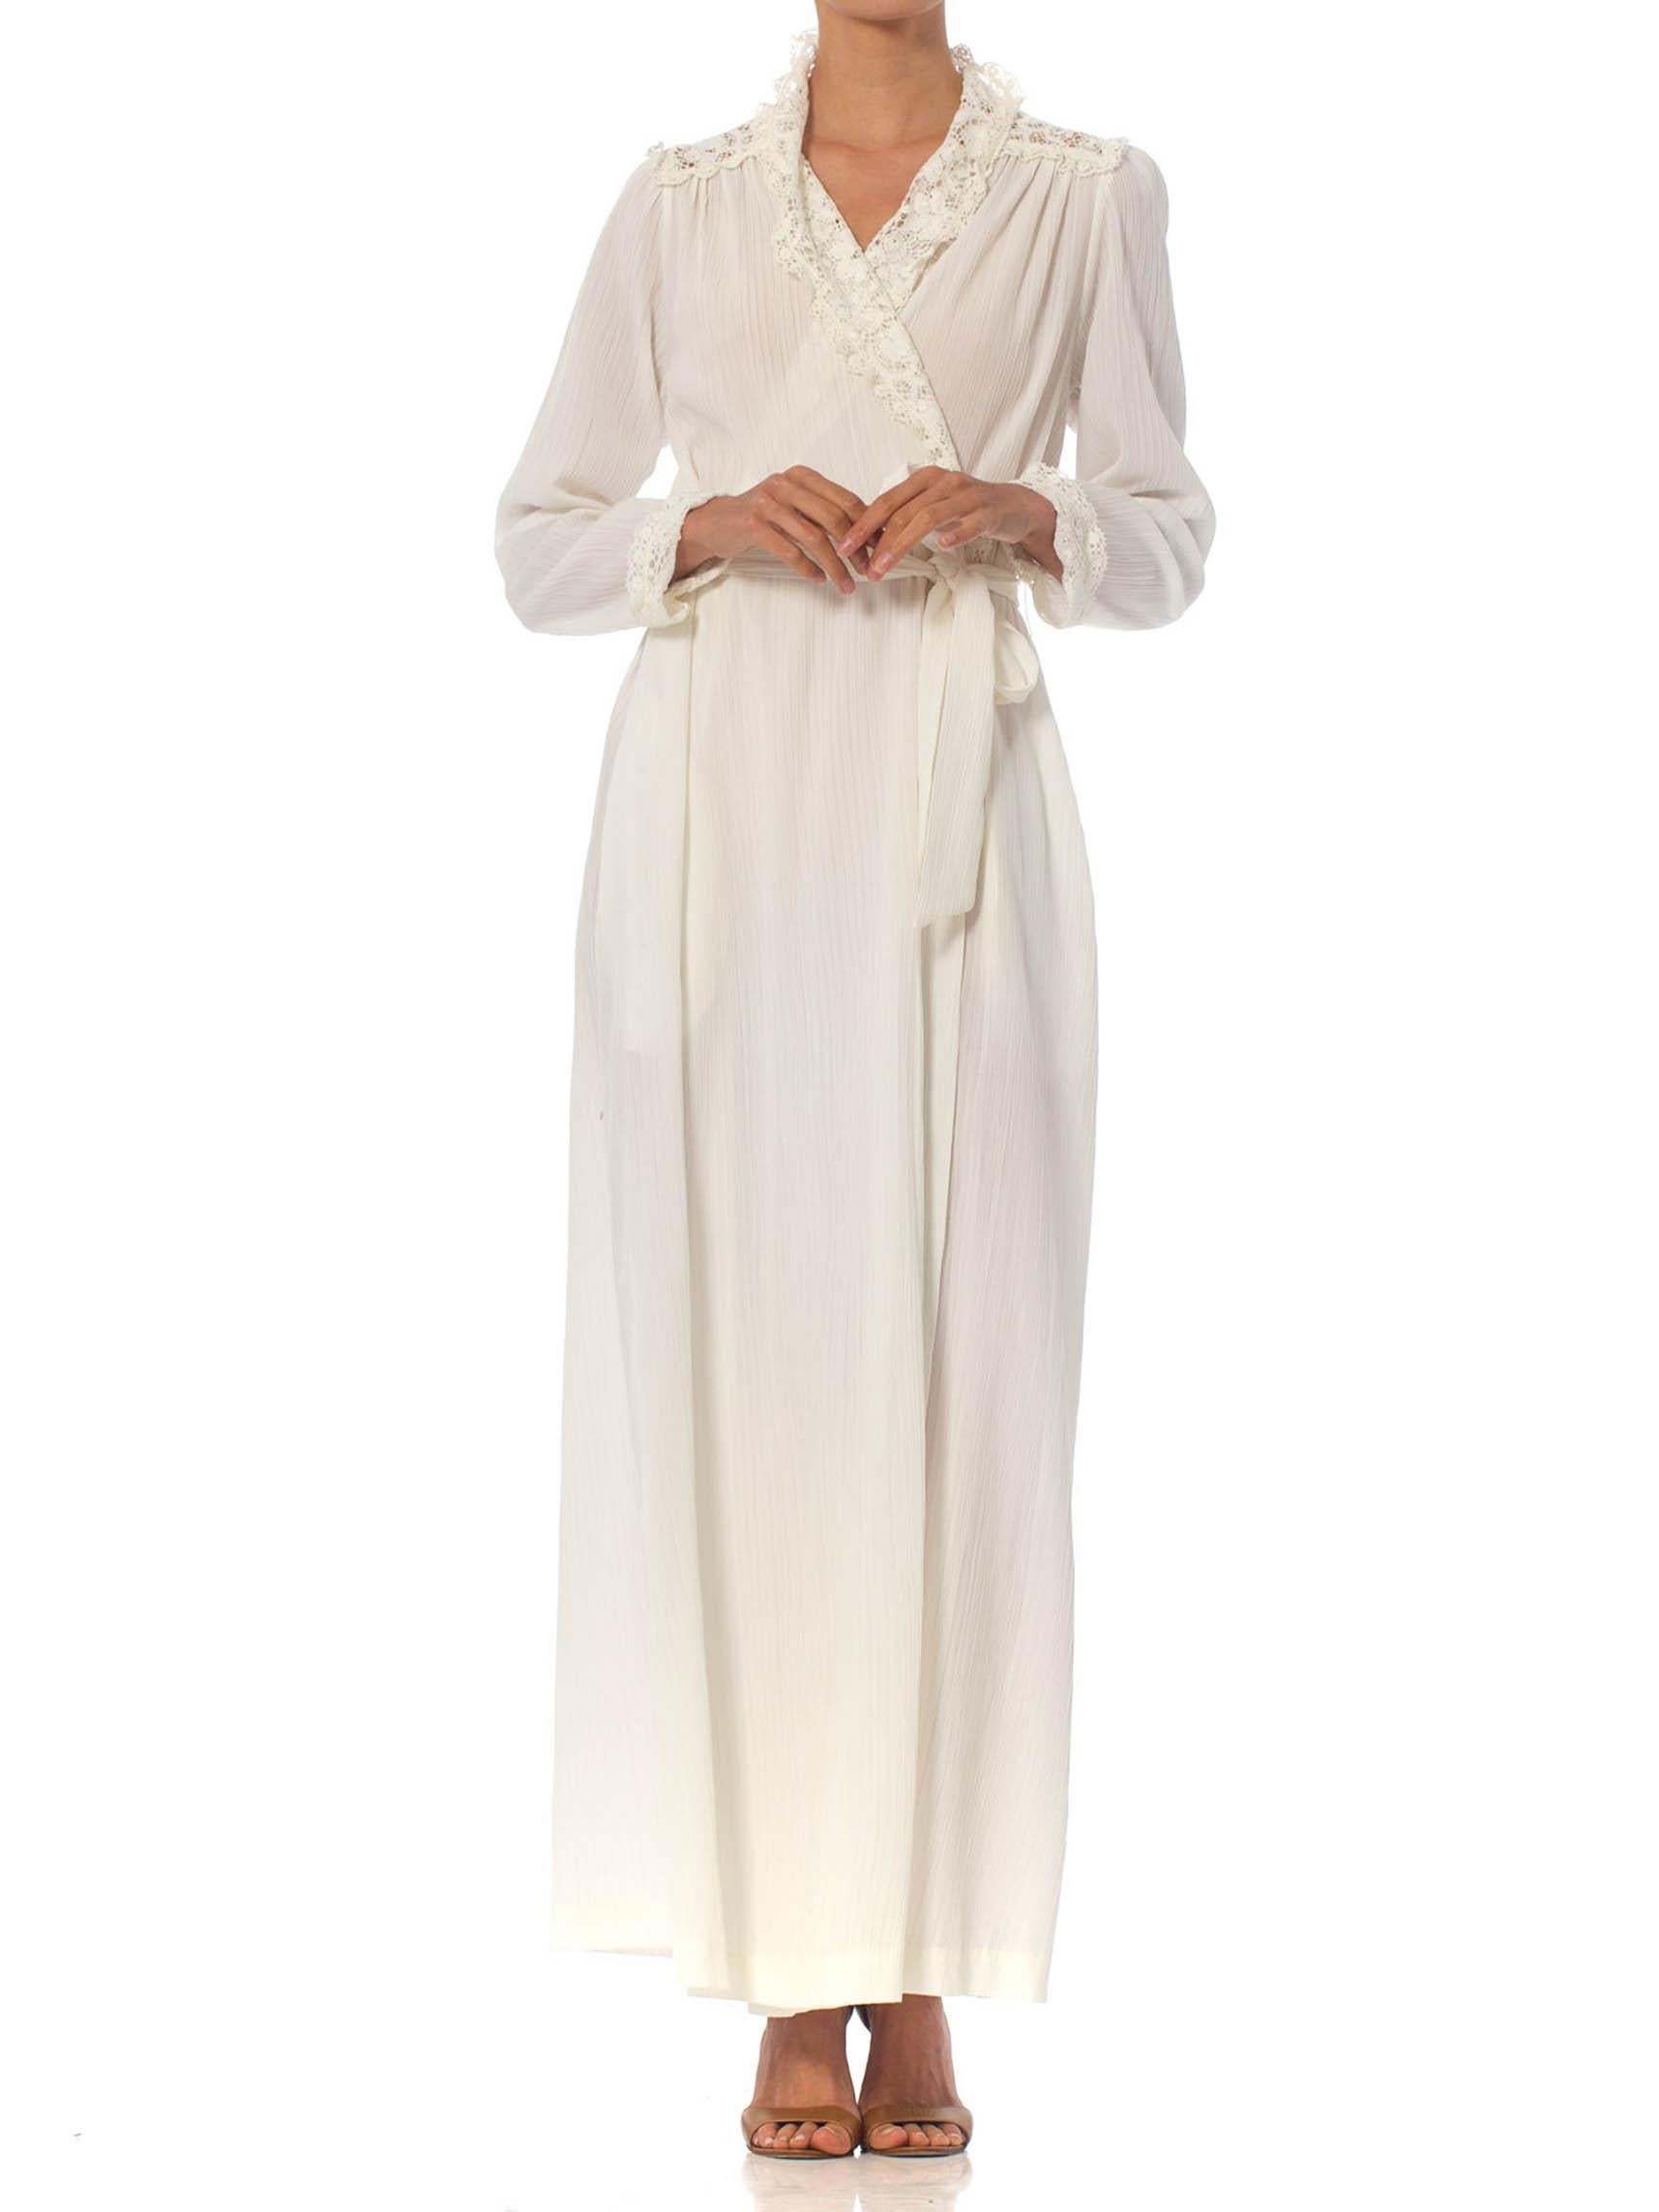 1970S CHRISTIAN DIOR White Cotton & Lace Wrap Dress / Robe 1